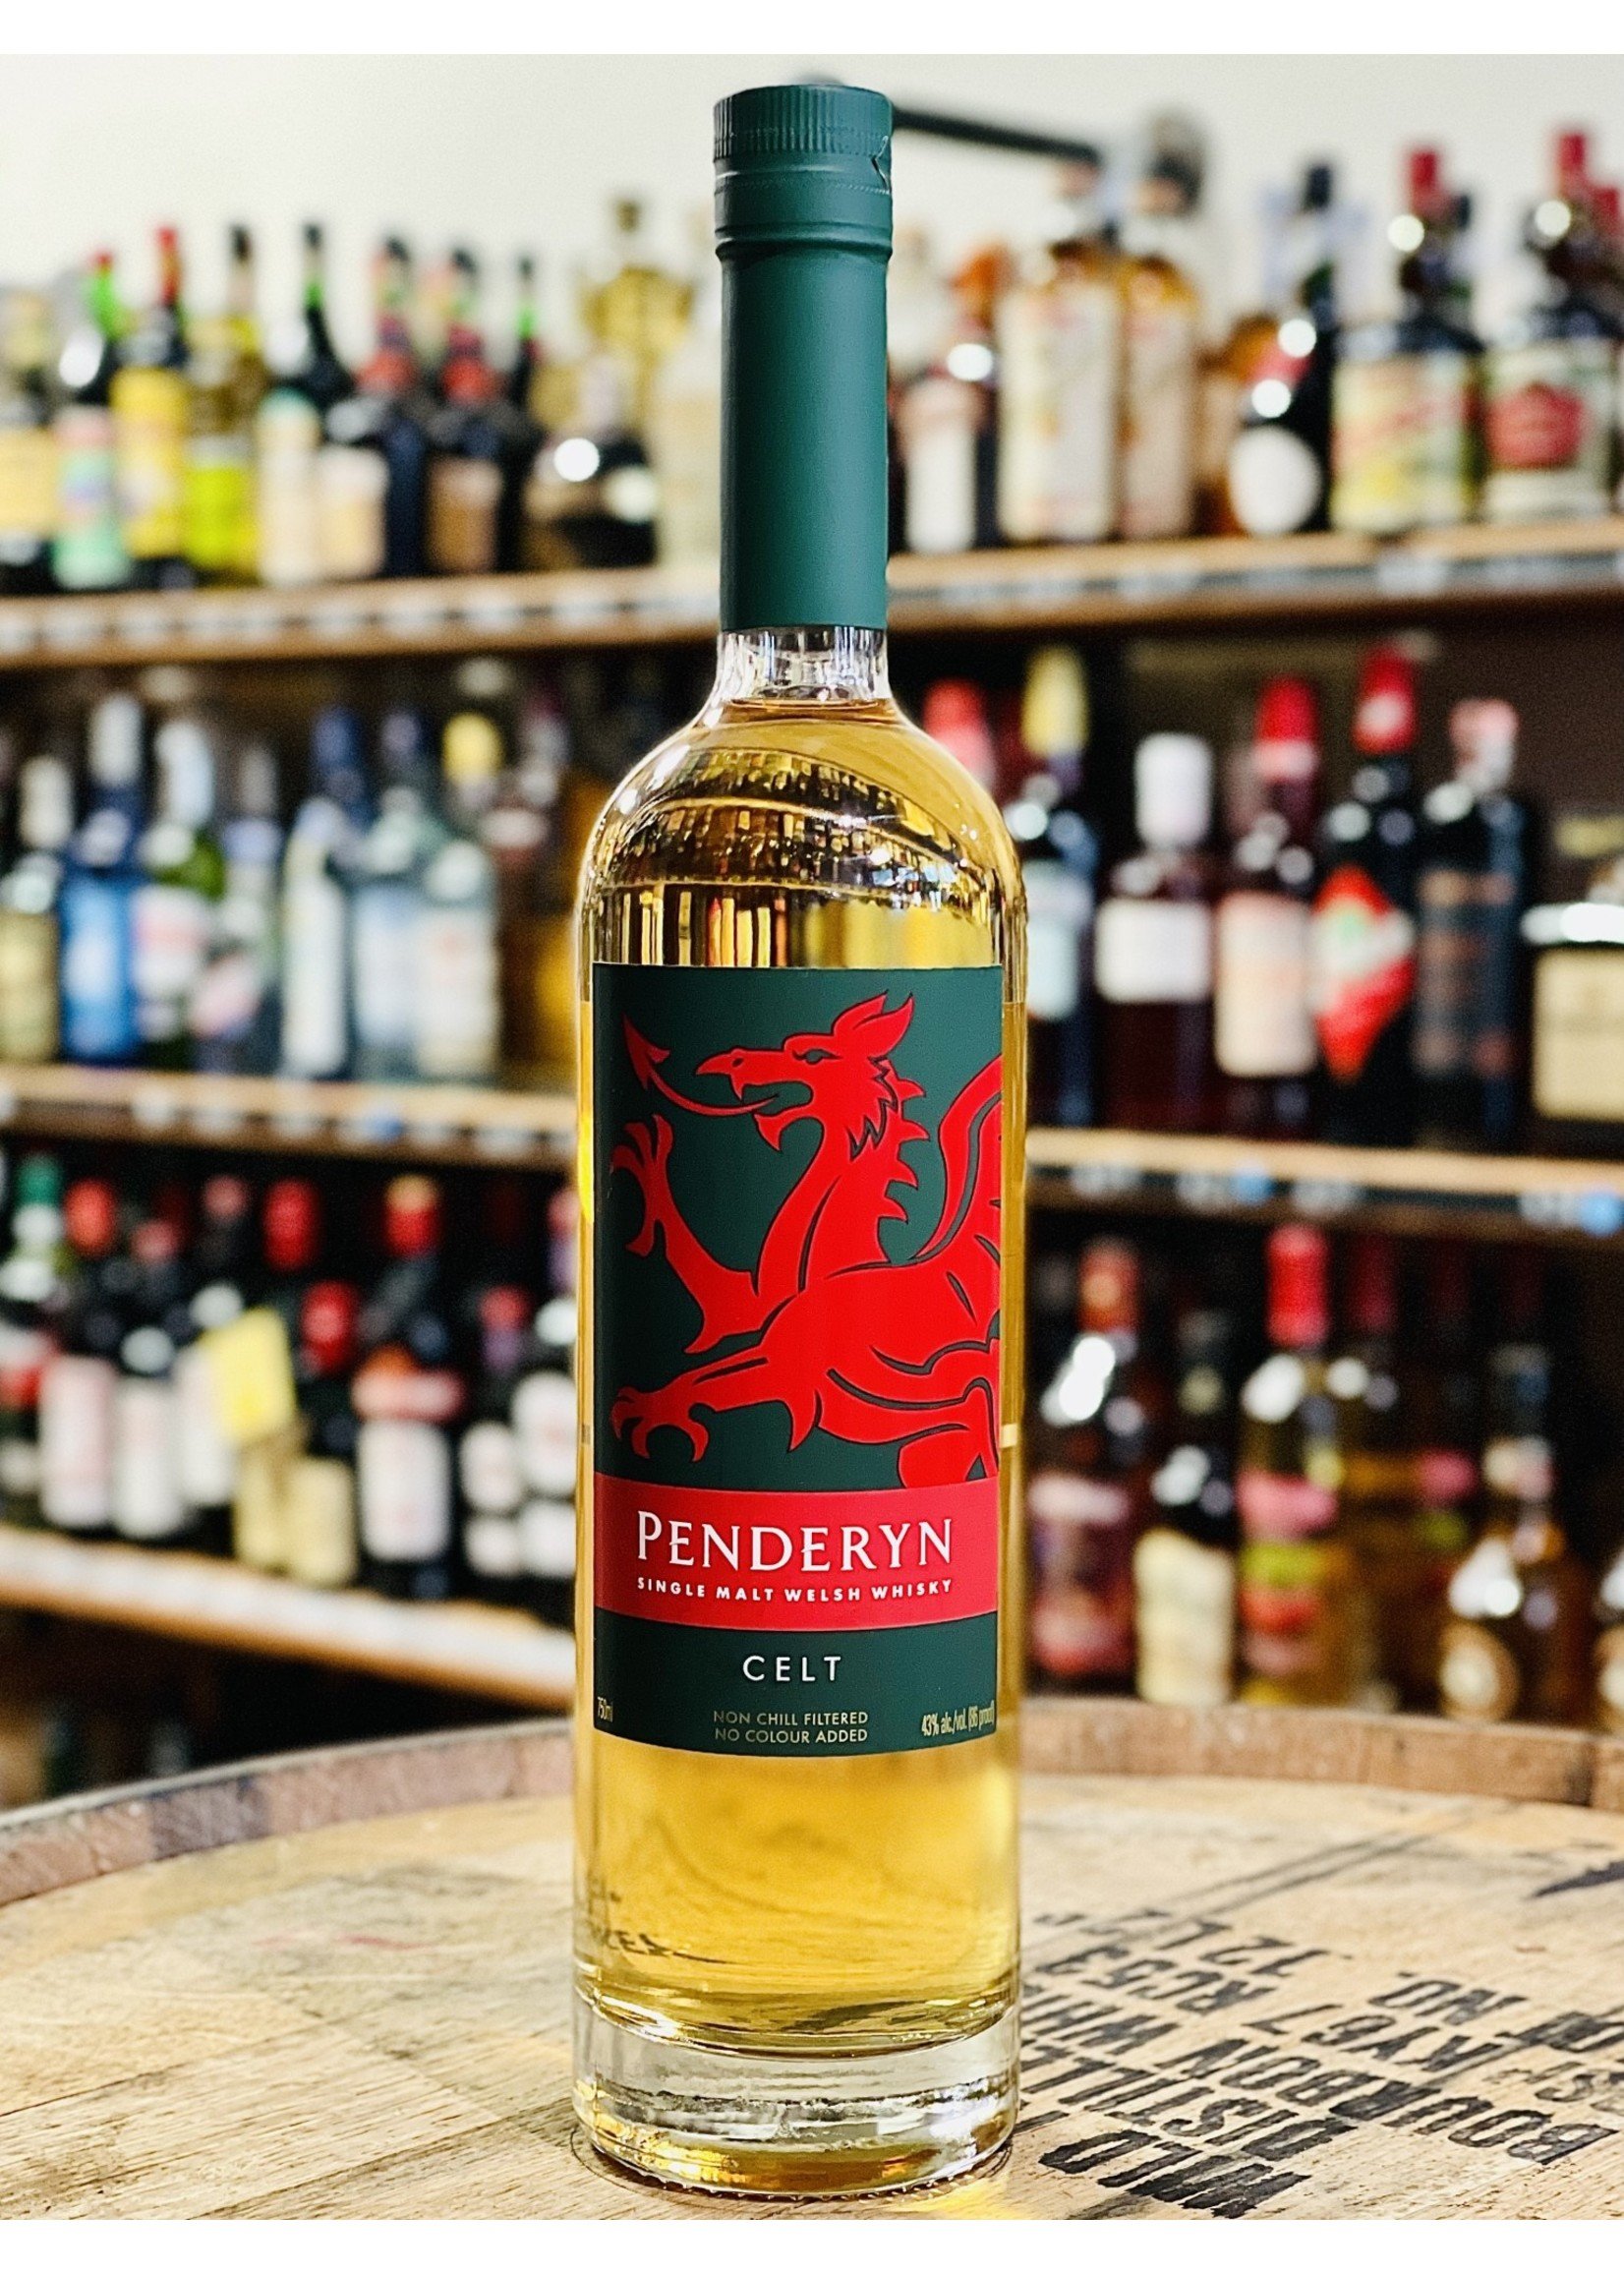 Penderyn Penderyn / Celt Single Malt Welsh Whisky 43% abv / 750mL